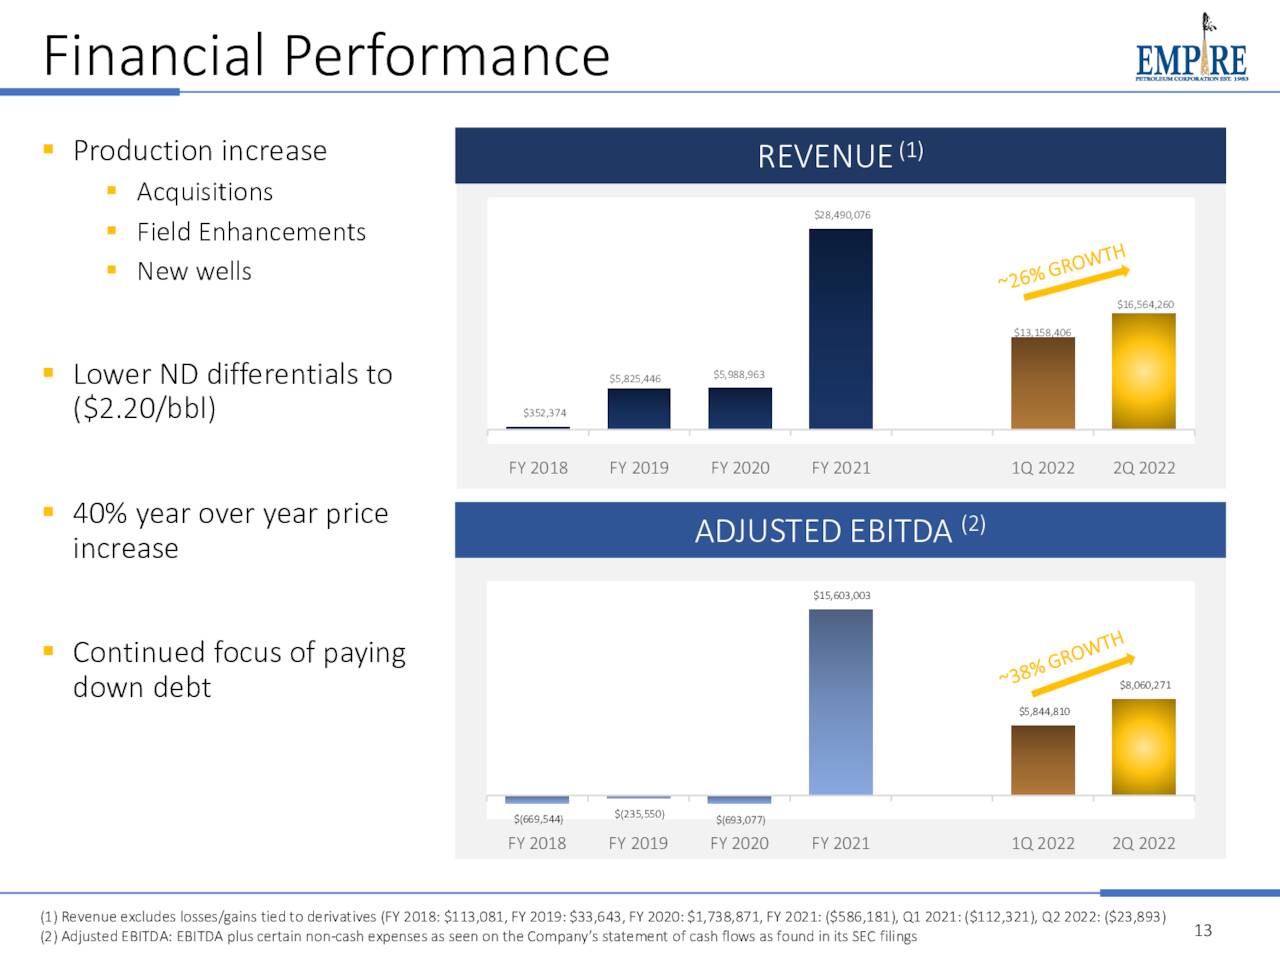 Financial performance